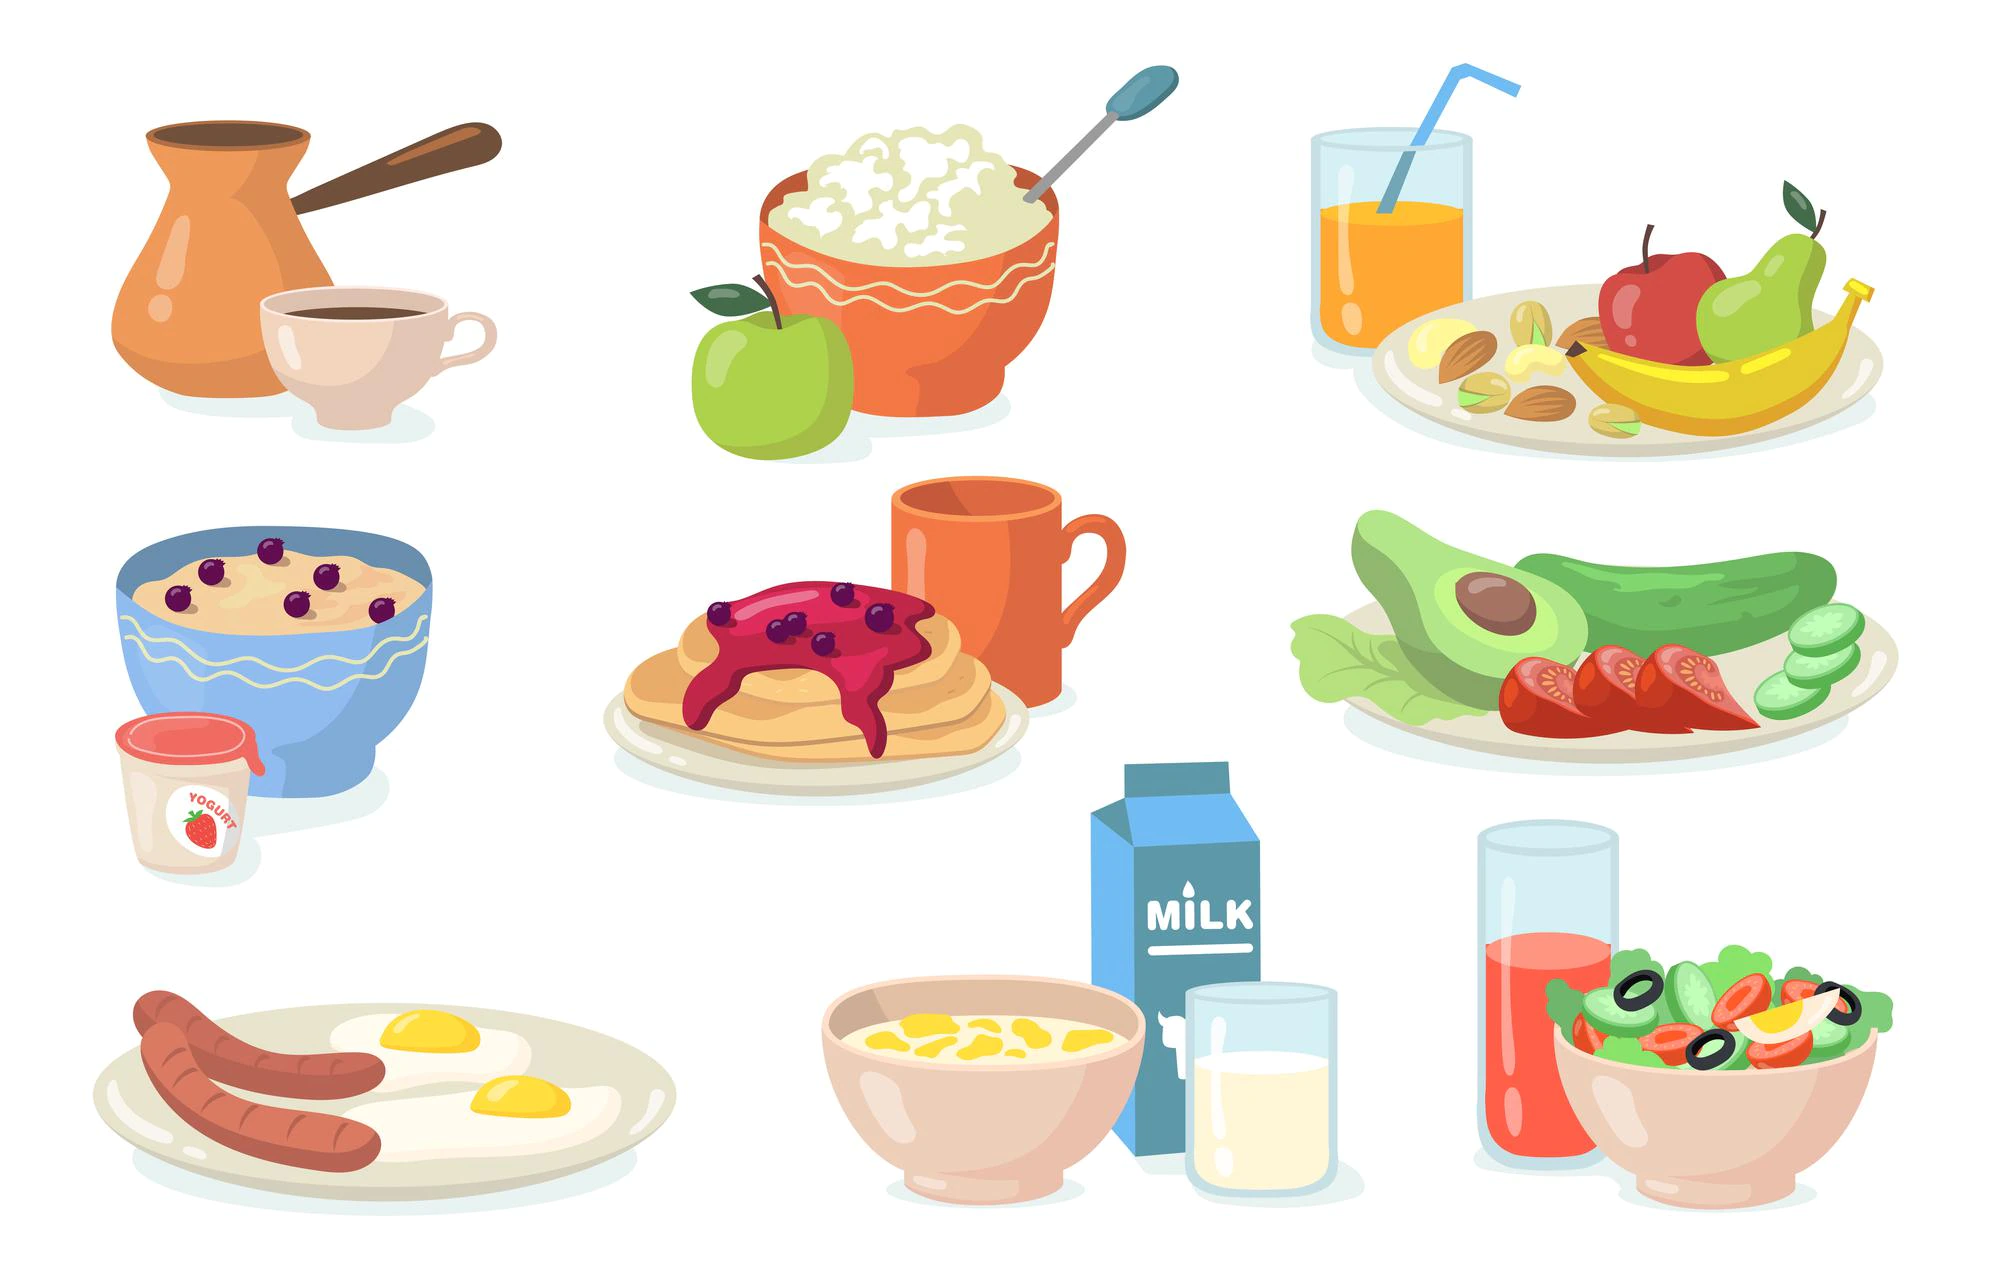 healthy breakfast meals set flat illustration 74855 14424